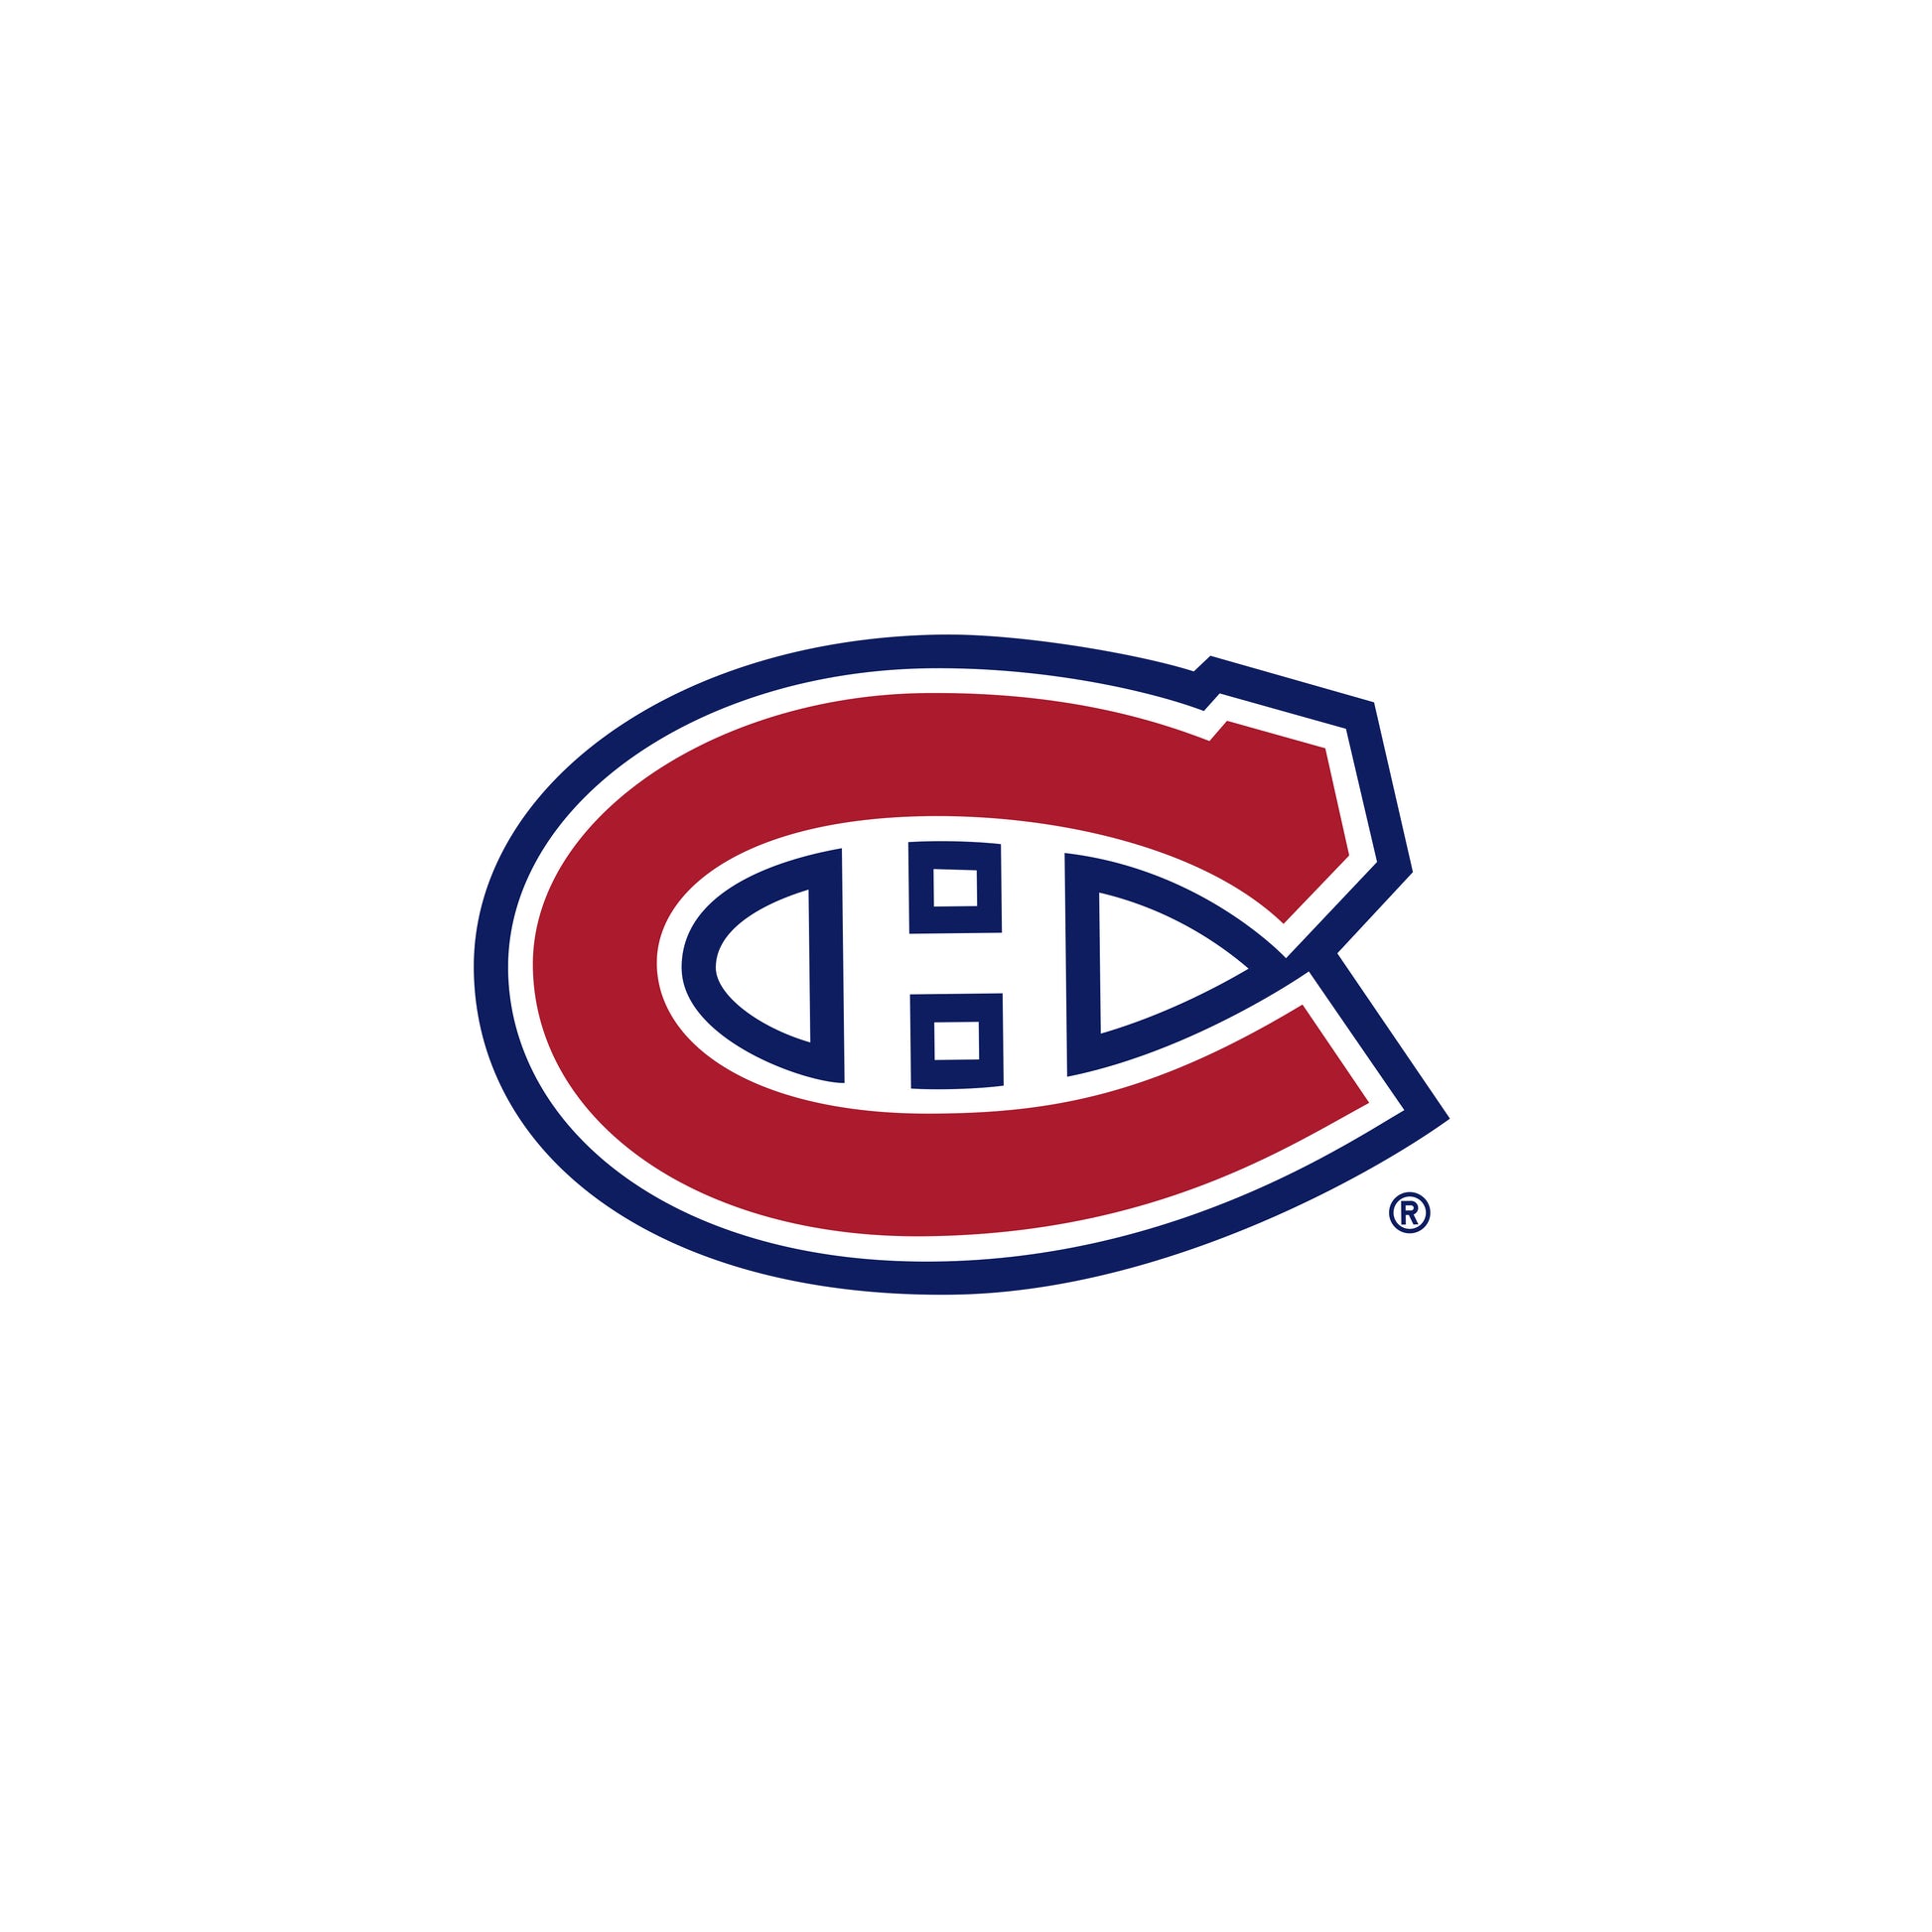 montreal canadiens logo